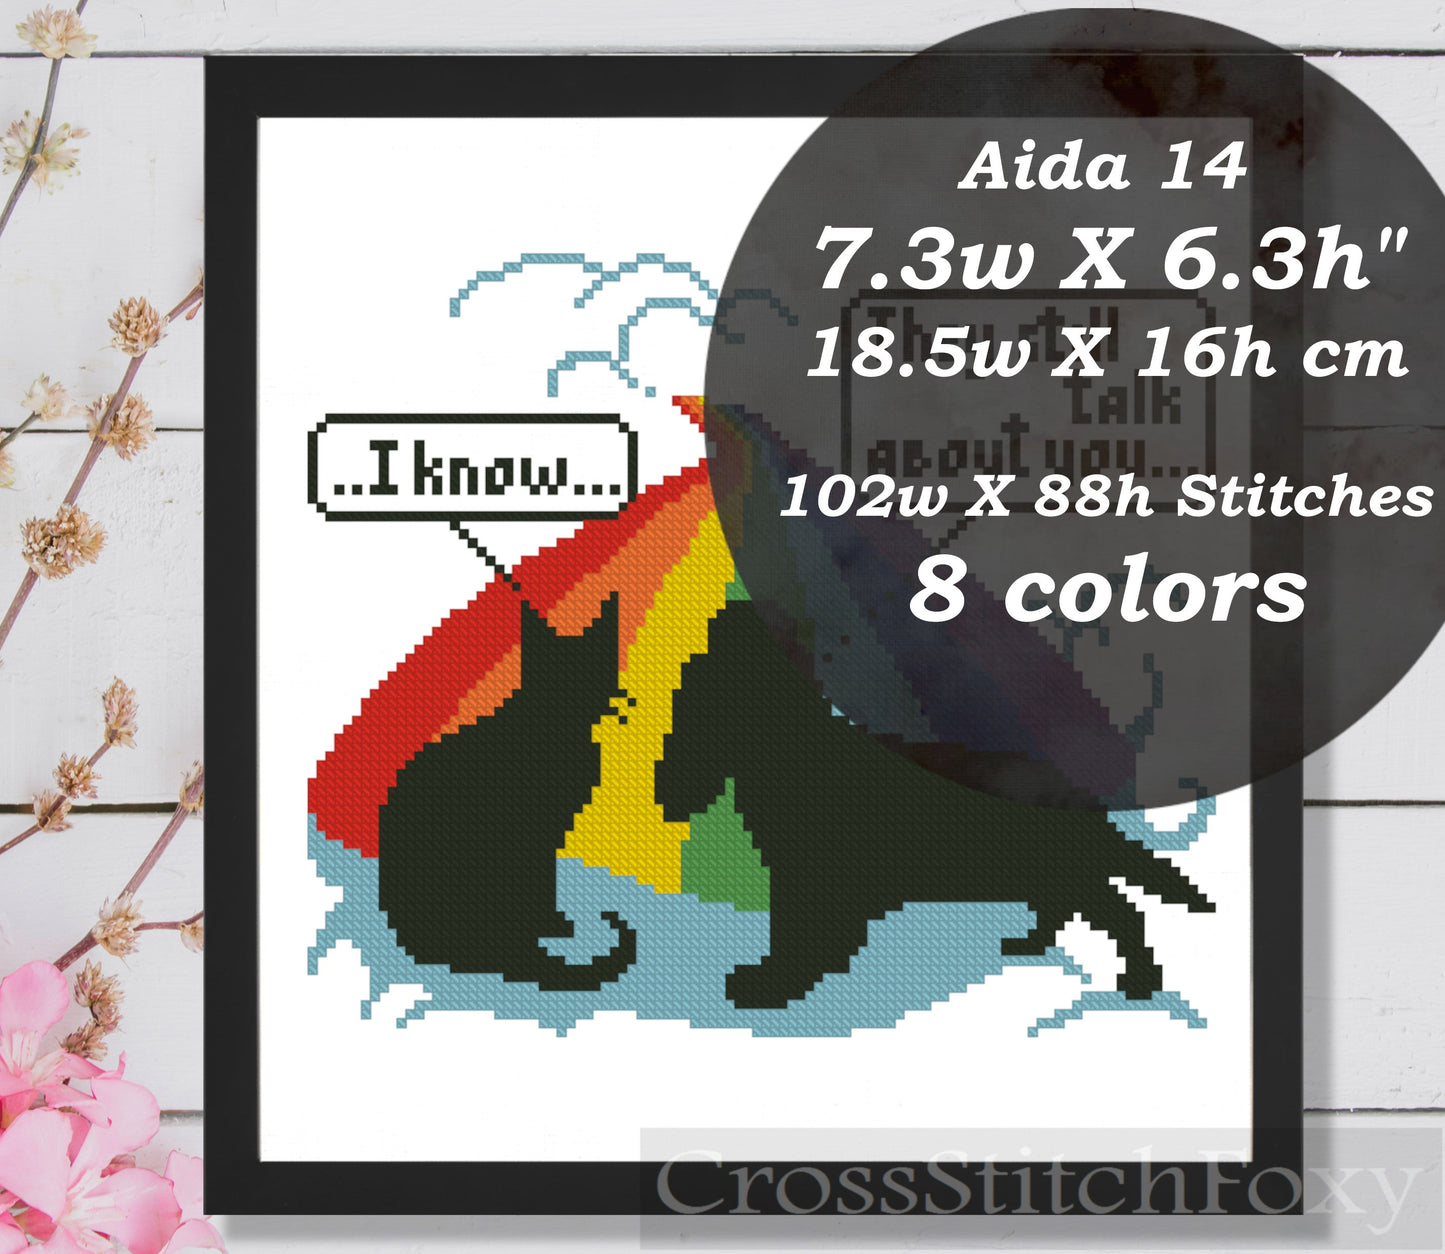 Rainbow bridge cat cocker dog cross stitch pattern